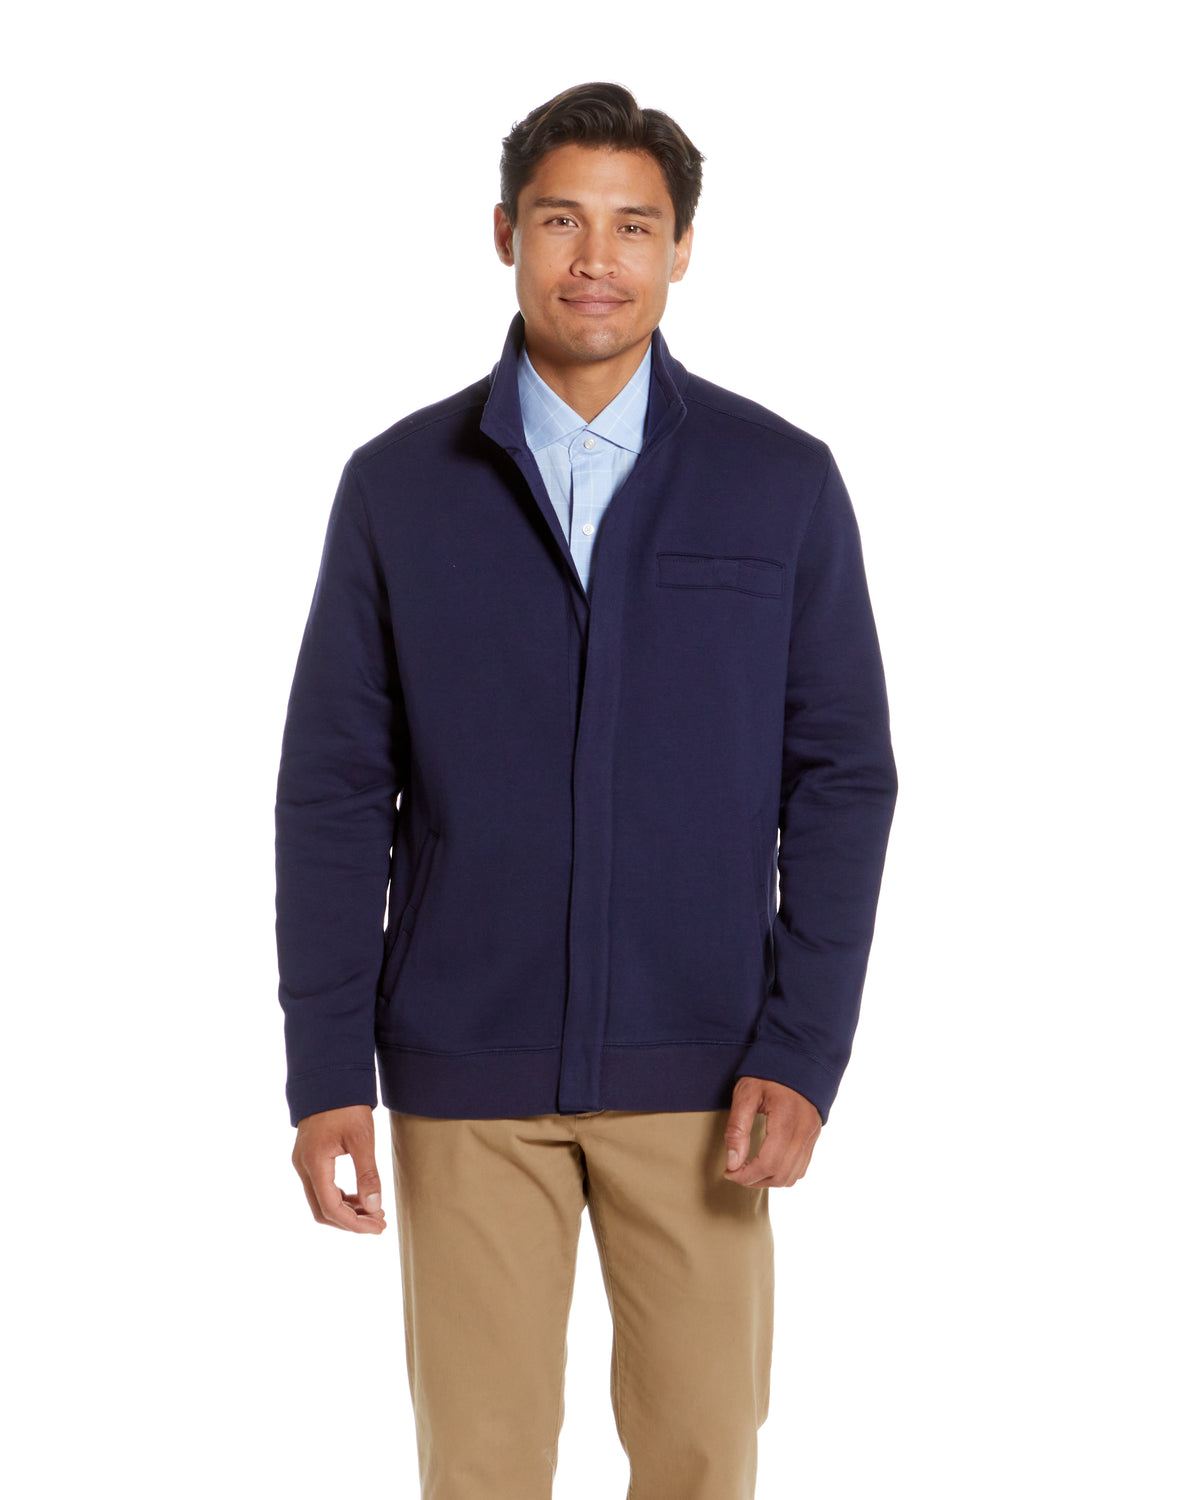 Men's Fleece Lined Jacket Adaptive Clothing for Seniors, Disabled & Elderly  Care